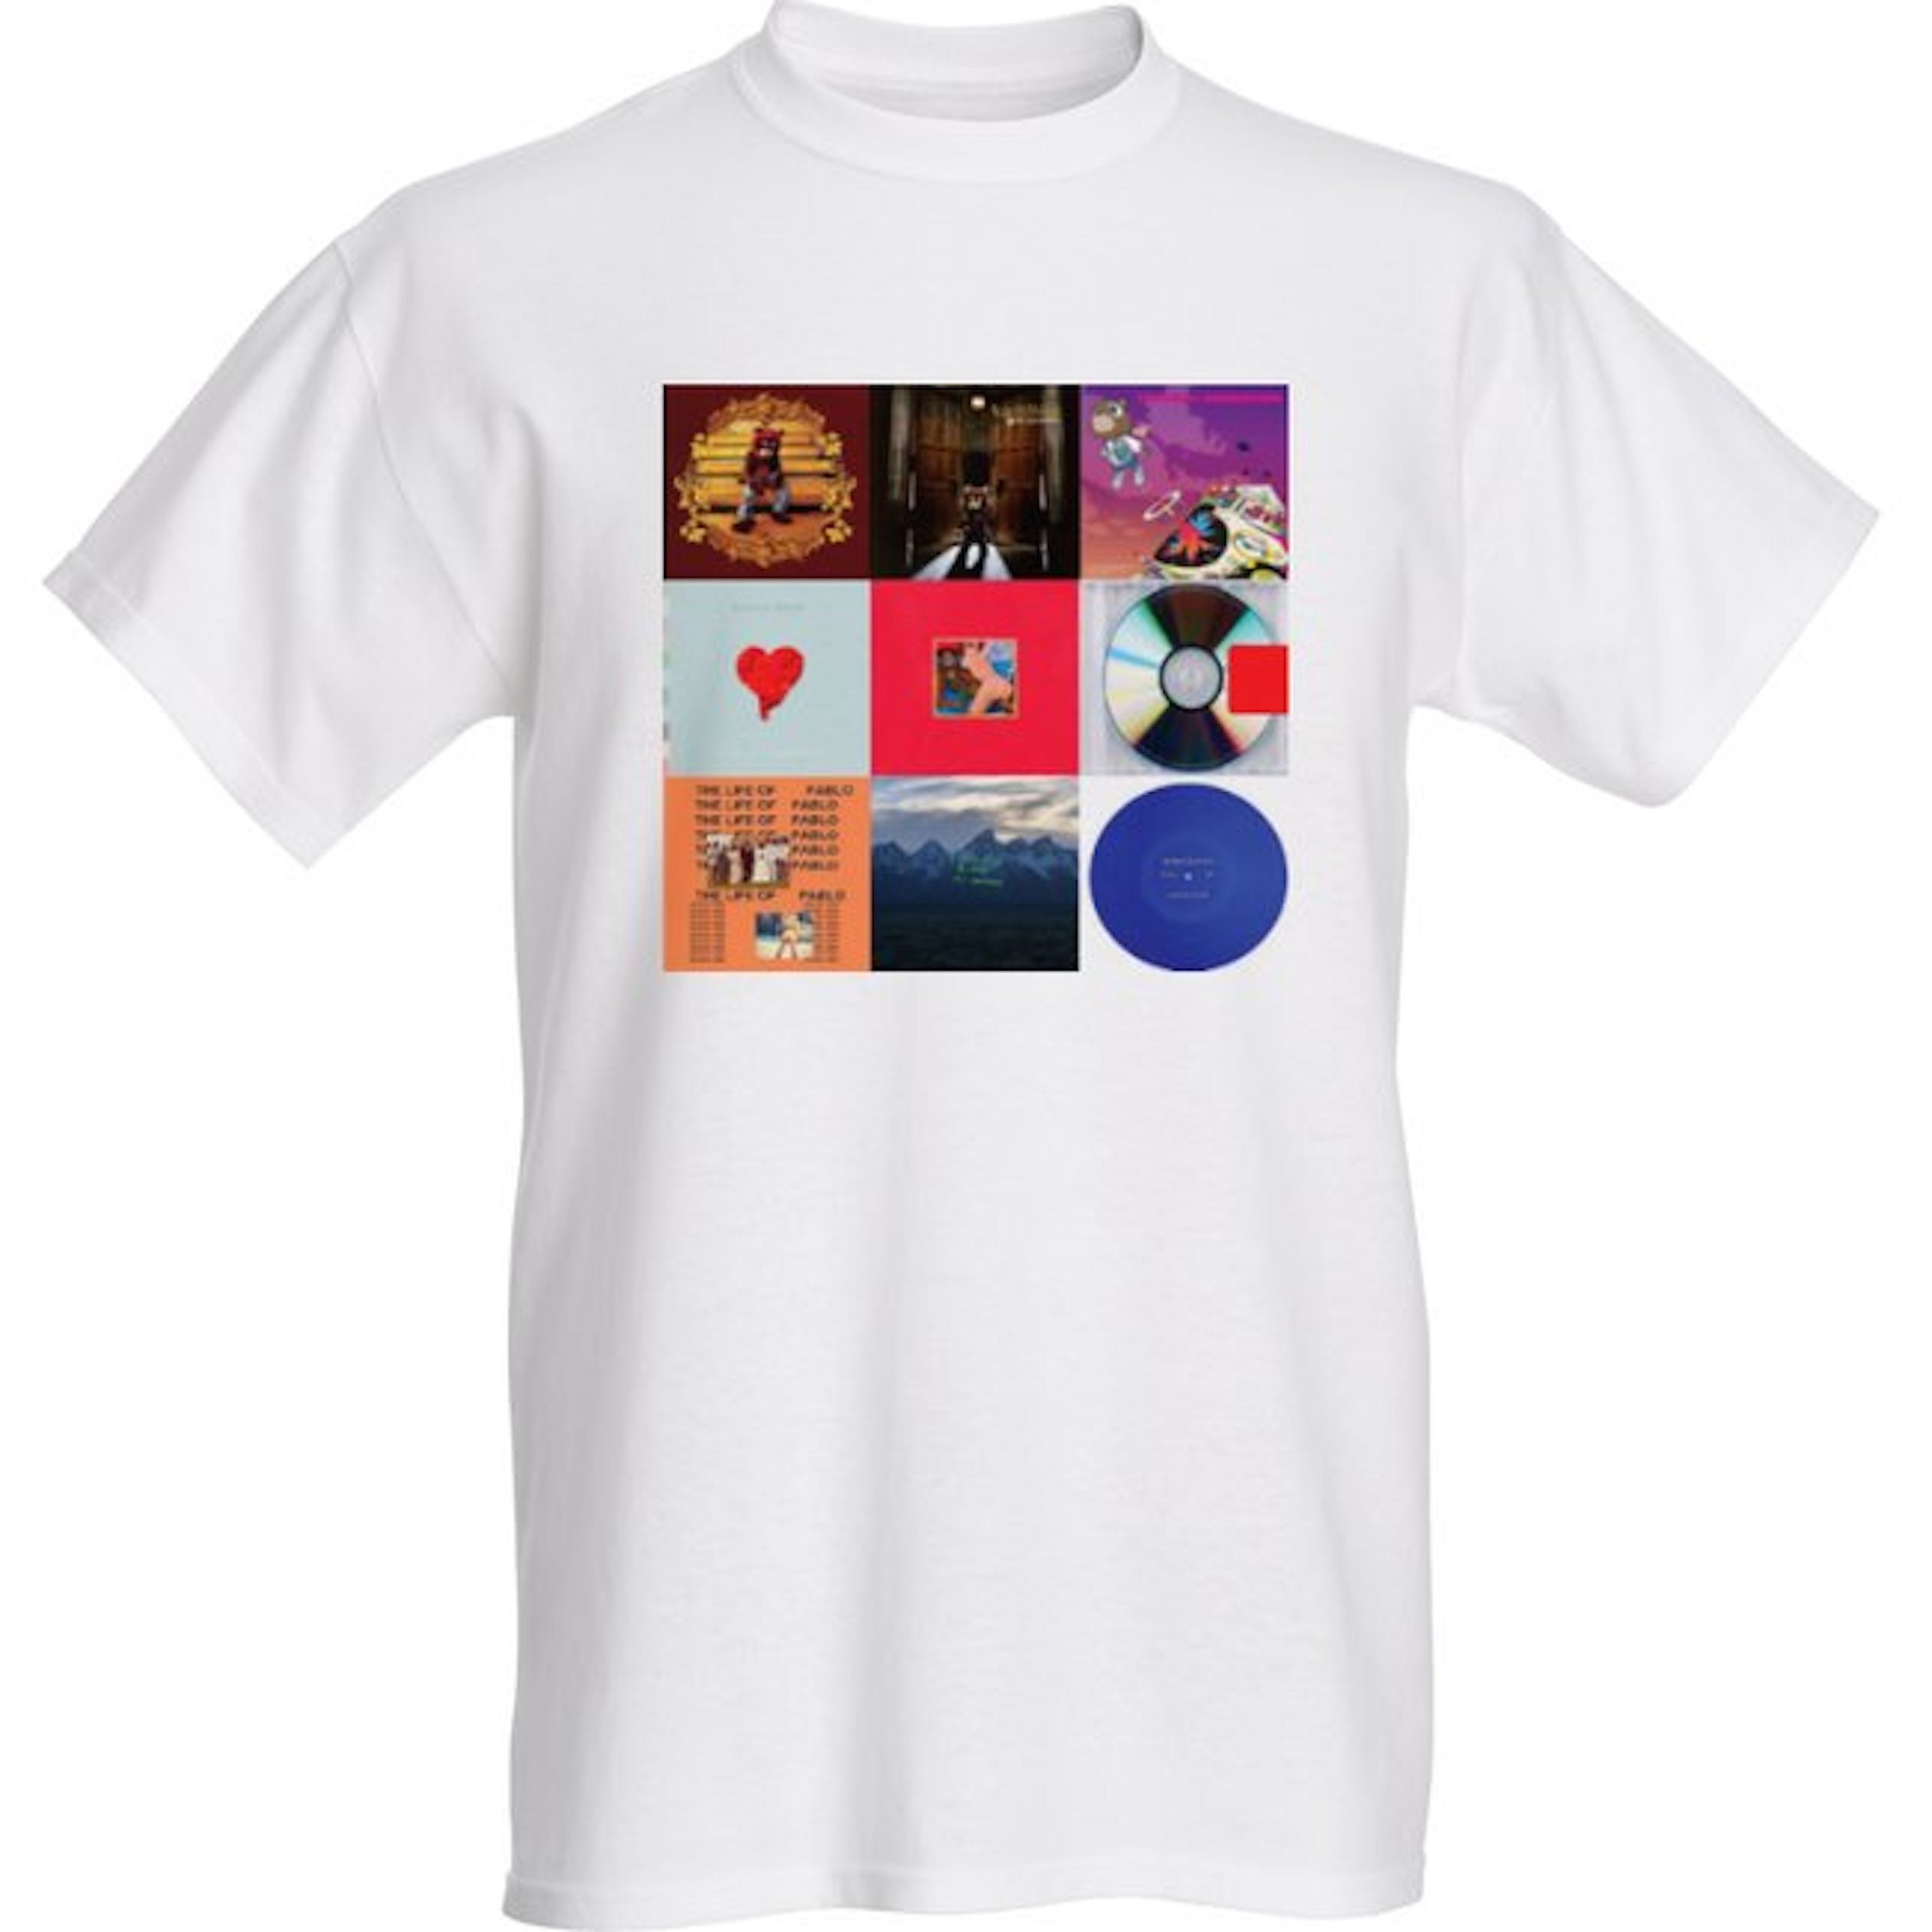 Kanye West Graduation Album Cover T-Shirt White – ALBUM COVER T-SHIRTS